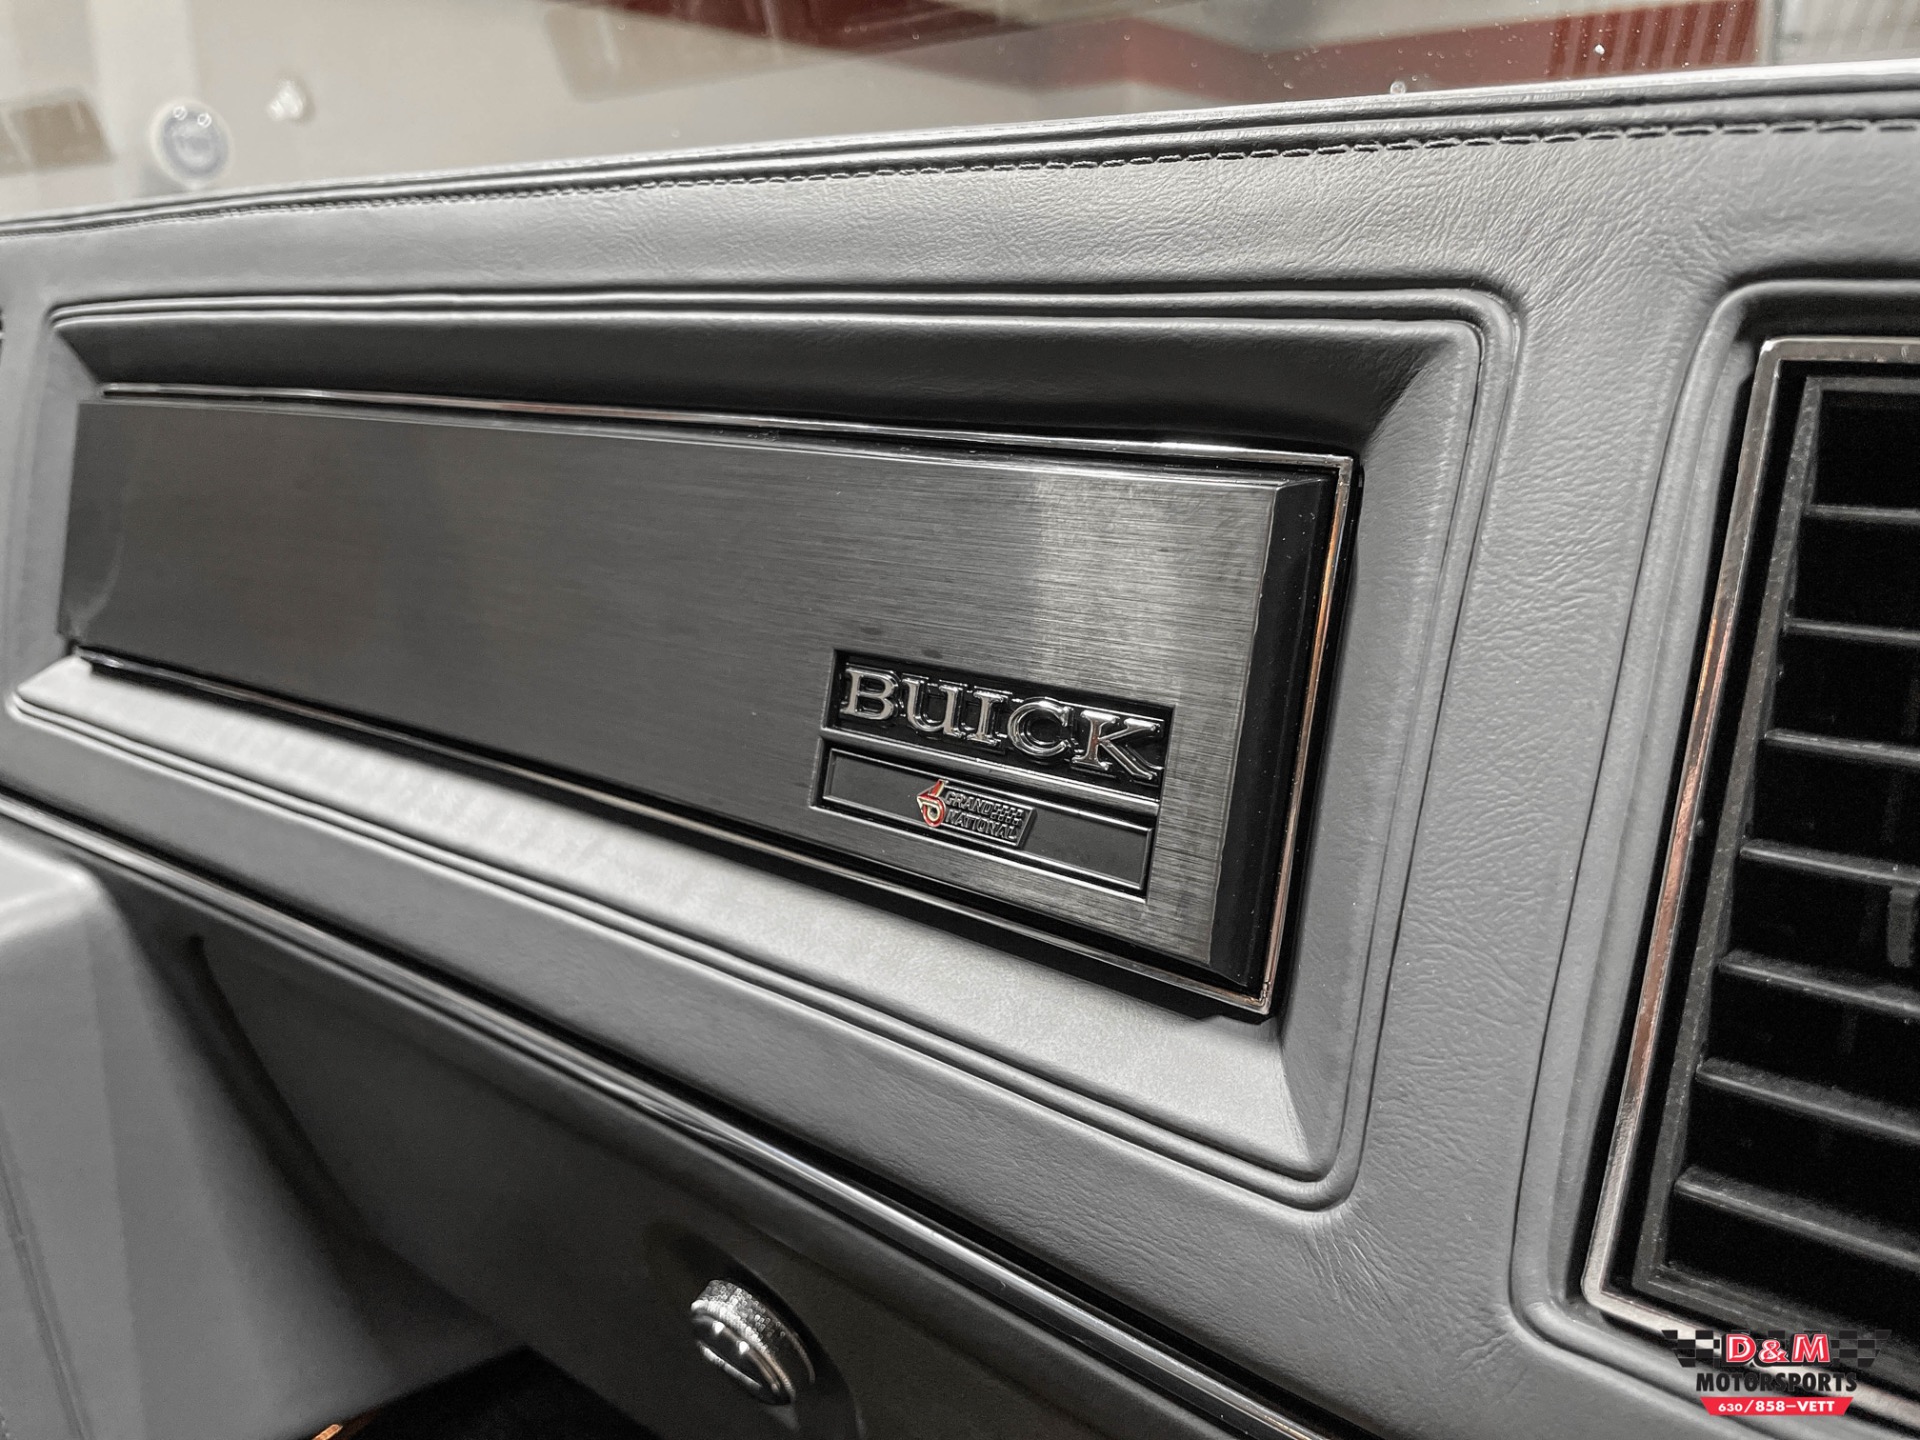 Used 1987 Buick Regal Grand National Turbo | Glen Ellyn, IL